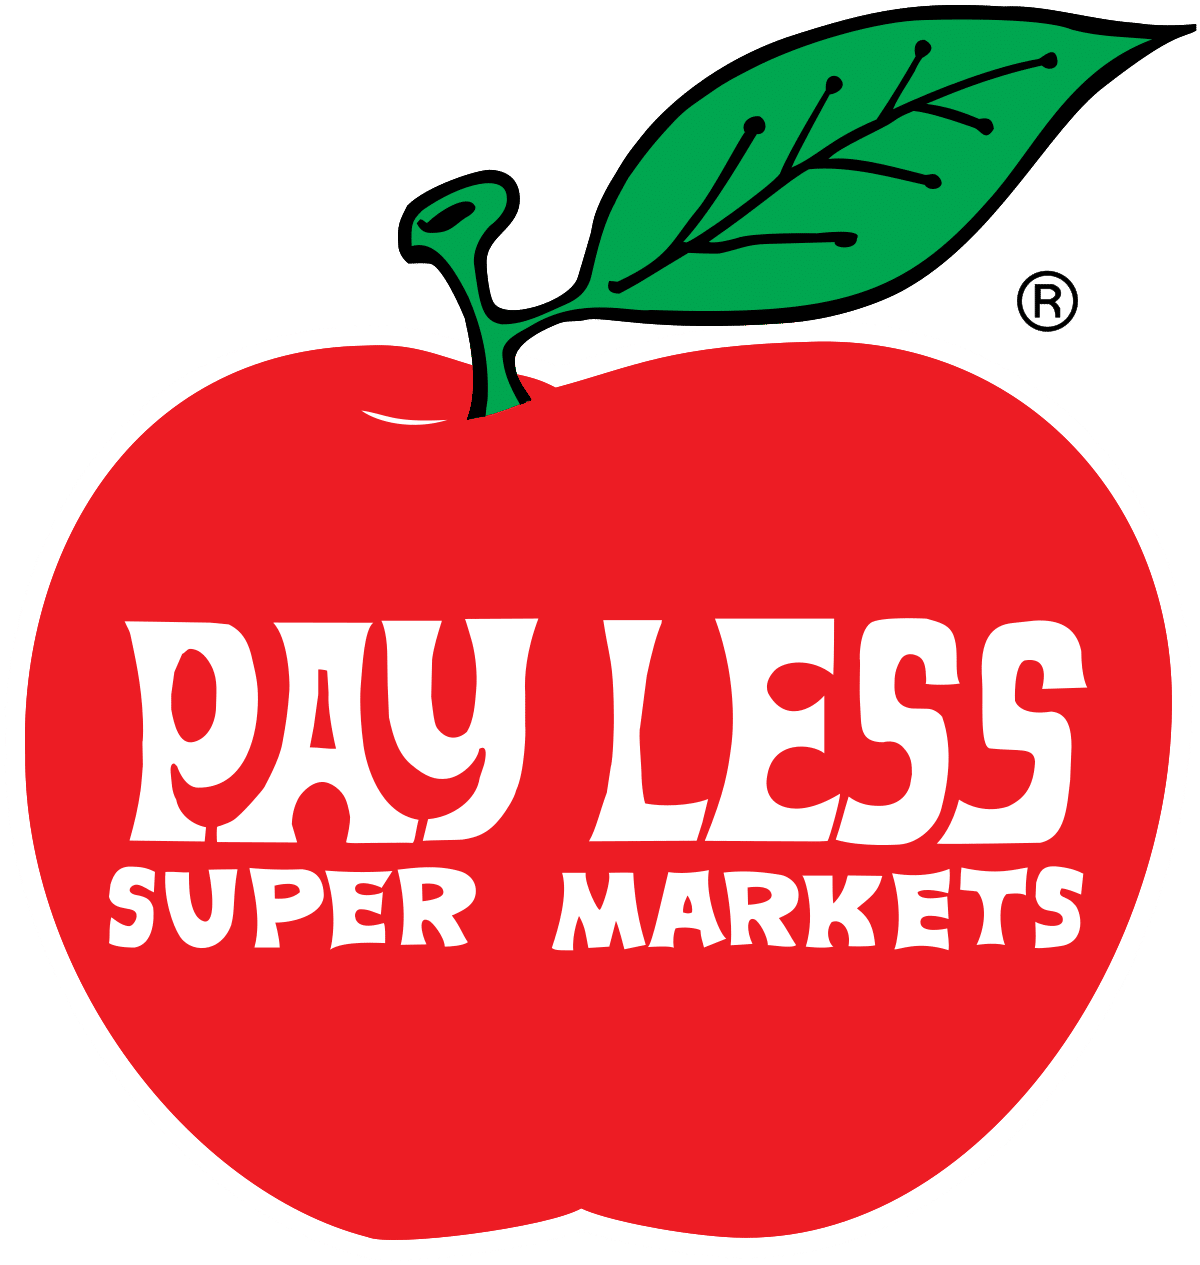 Pay Less Super Markets logo